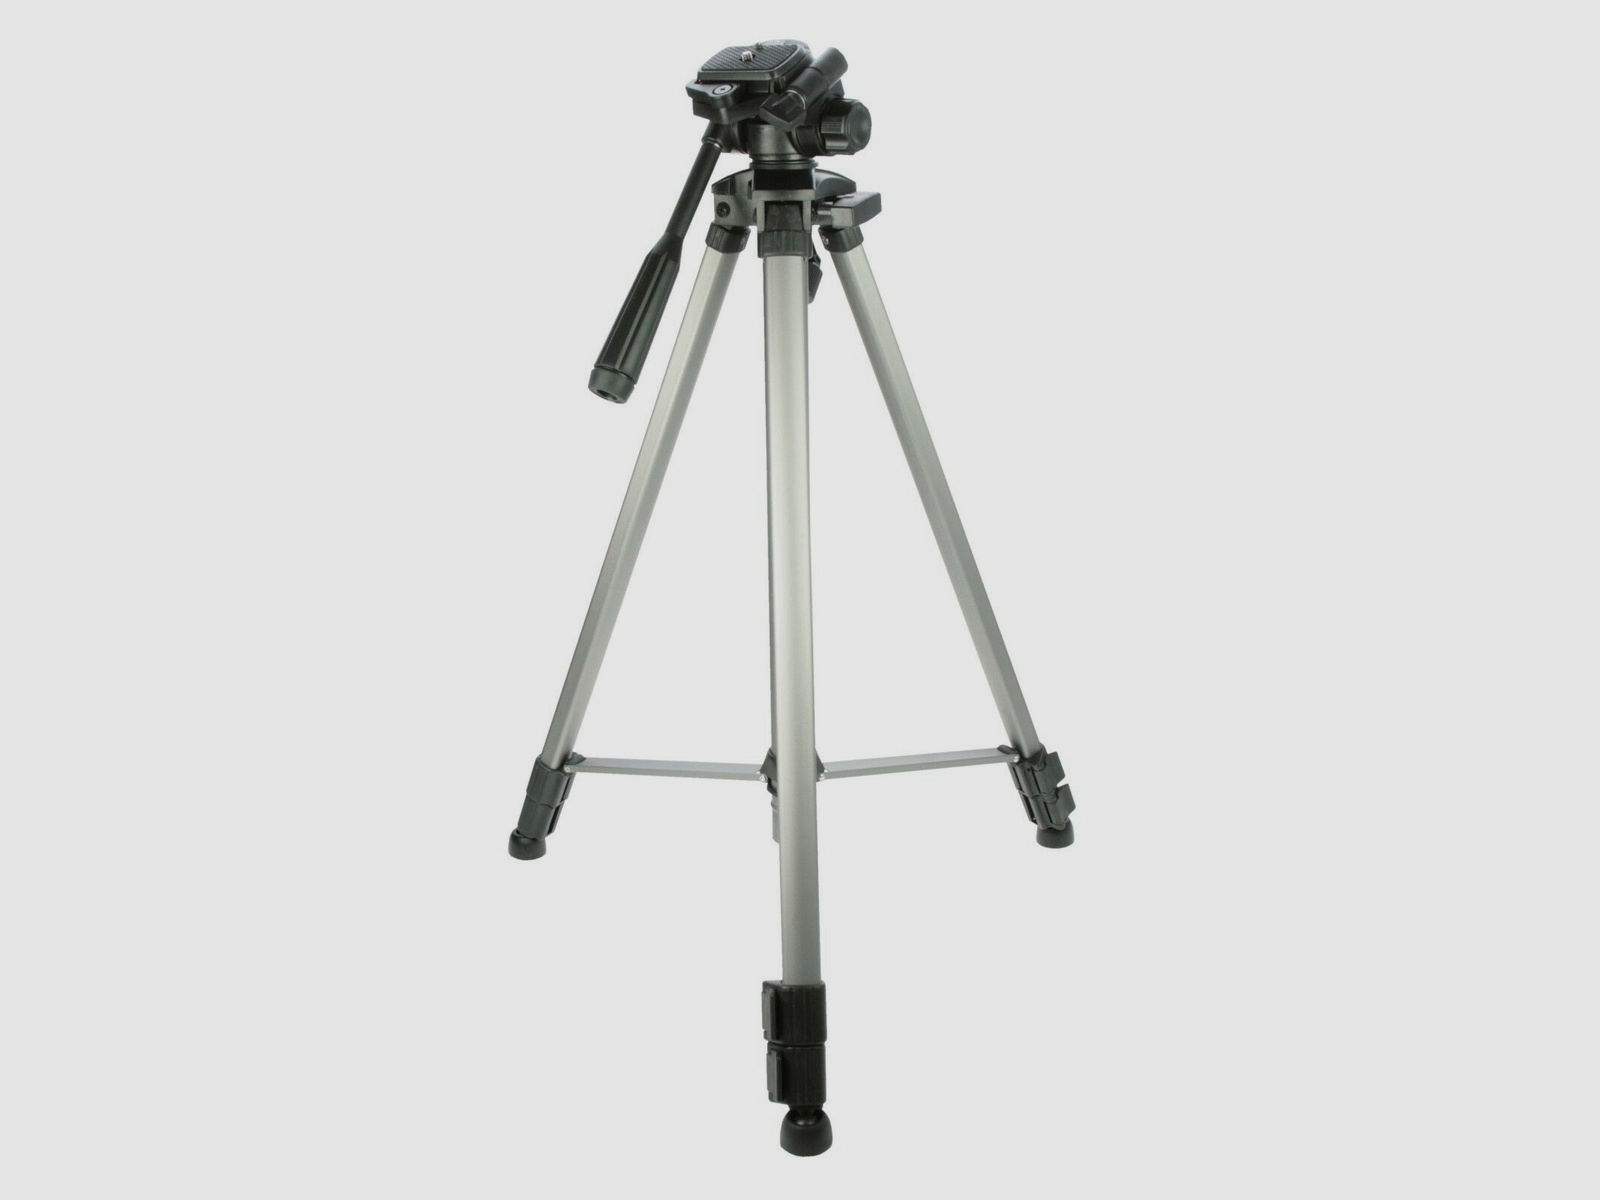 Fernglas-KW Stativ Foto Videostativ für Spektive Kameras Ferngläser Höhe 172 cm